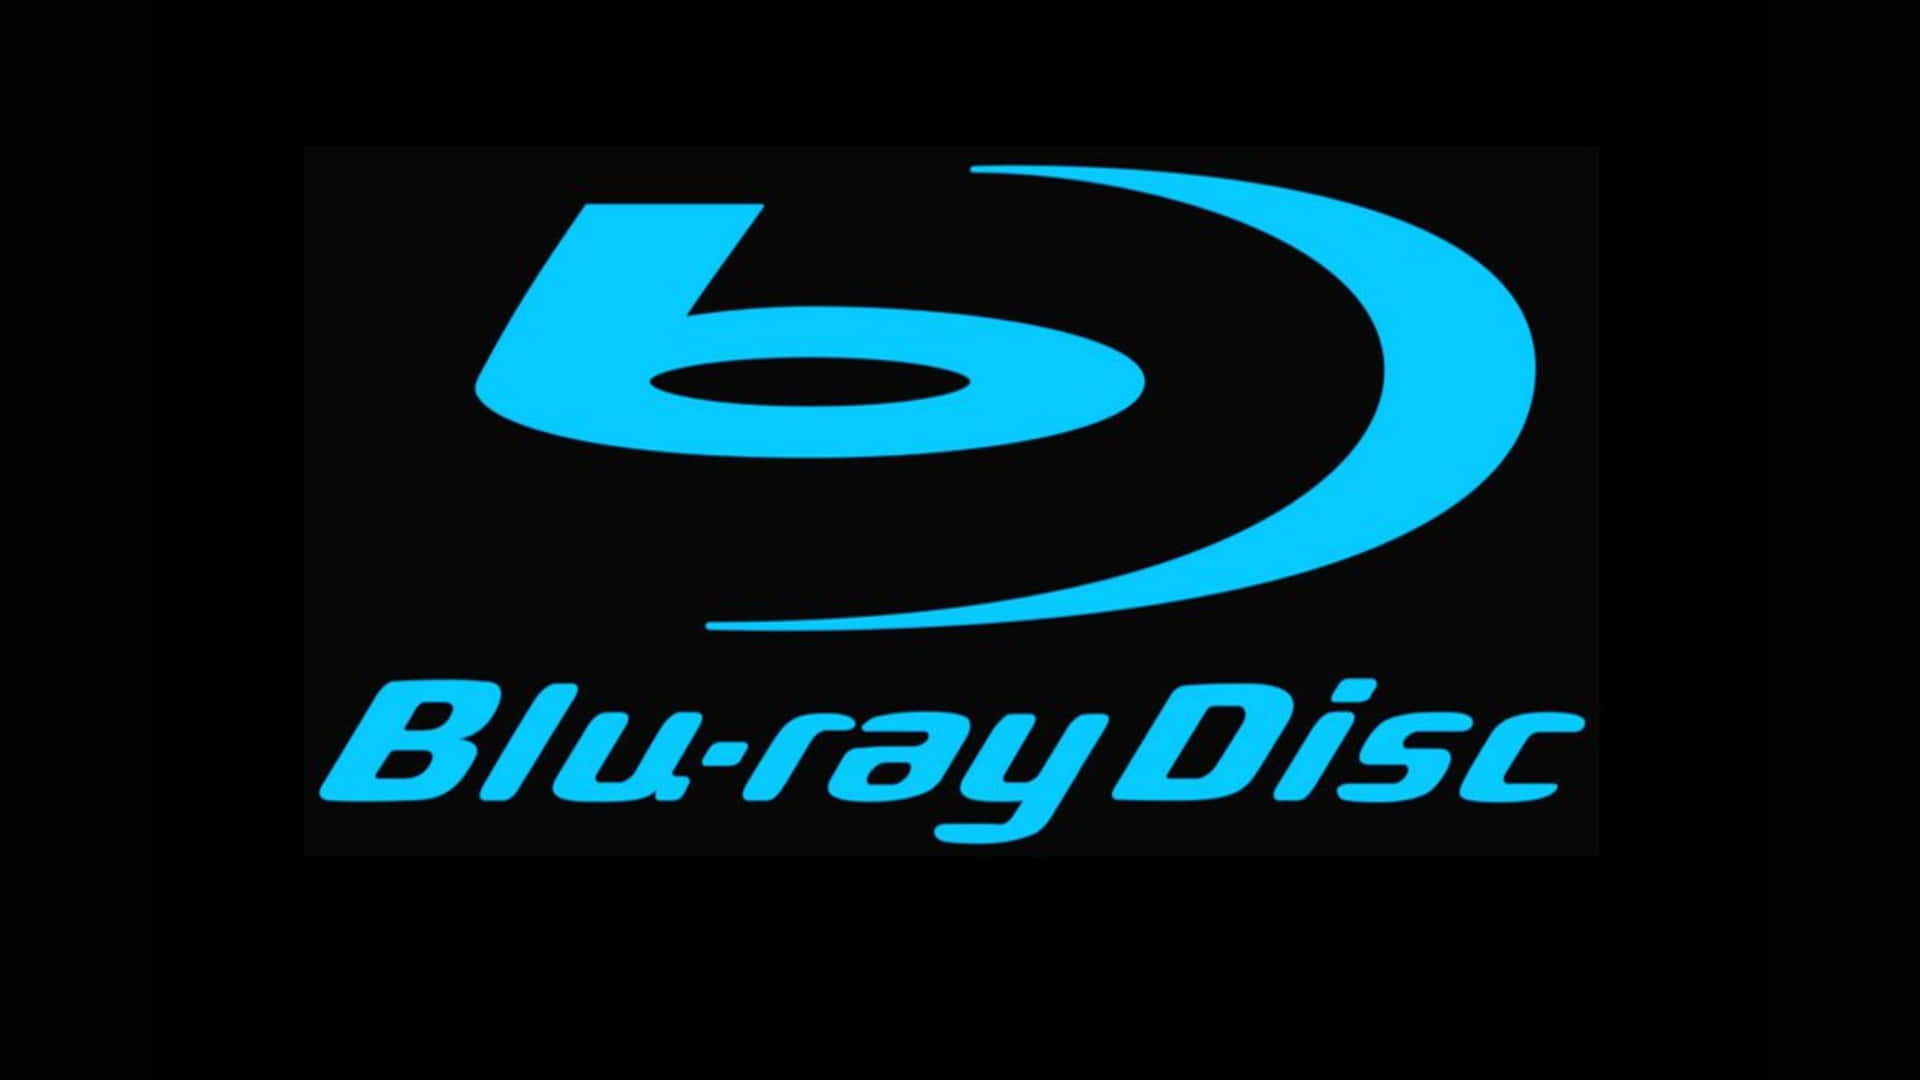 Blu com. Blu-ray Disc. Blu ray диски. Логотип Блю Рей диск. Логотип Blu-ray 4k.